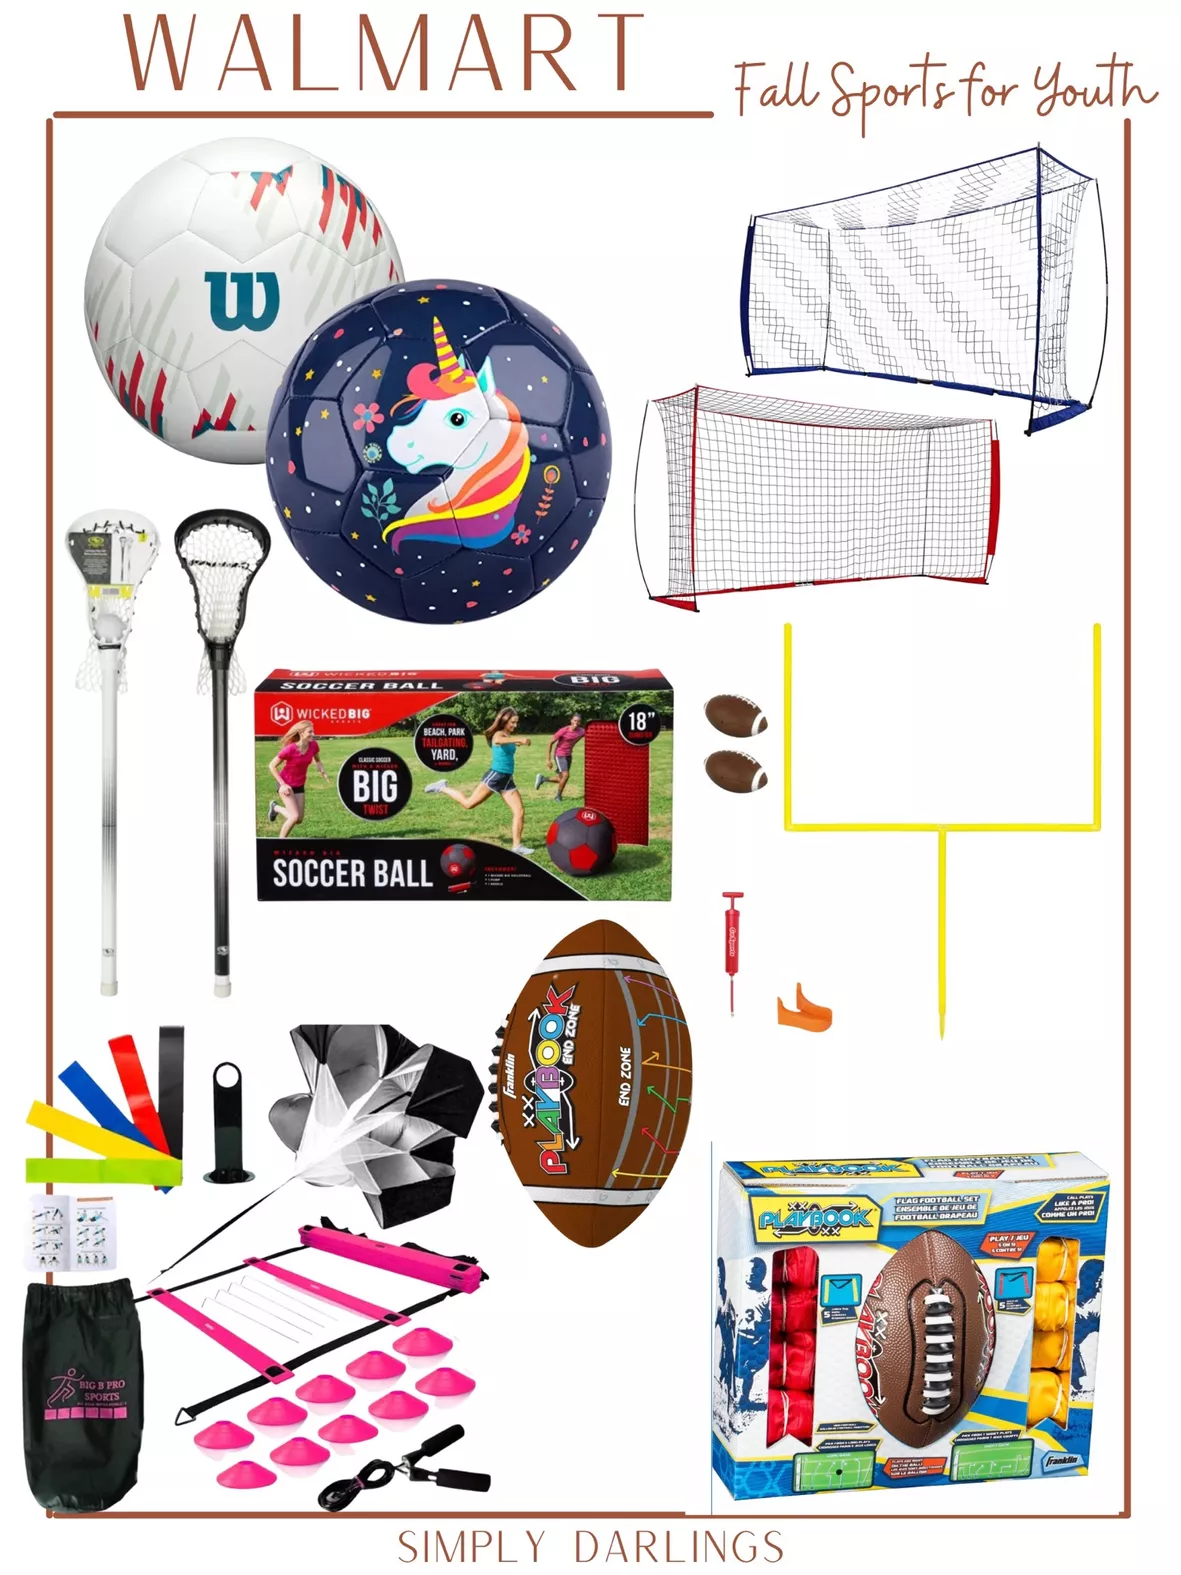 Athletic Works Mini Lacrosse Sticks and Ball Set for Kids, Black/White